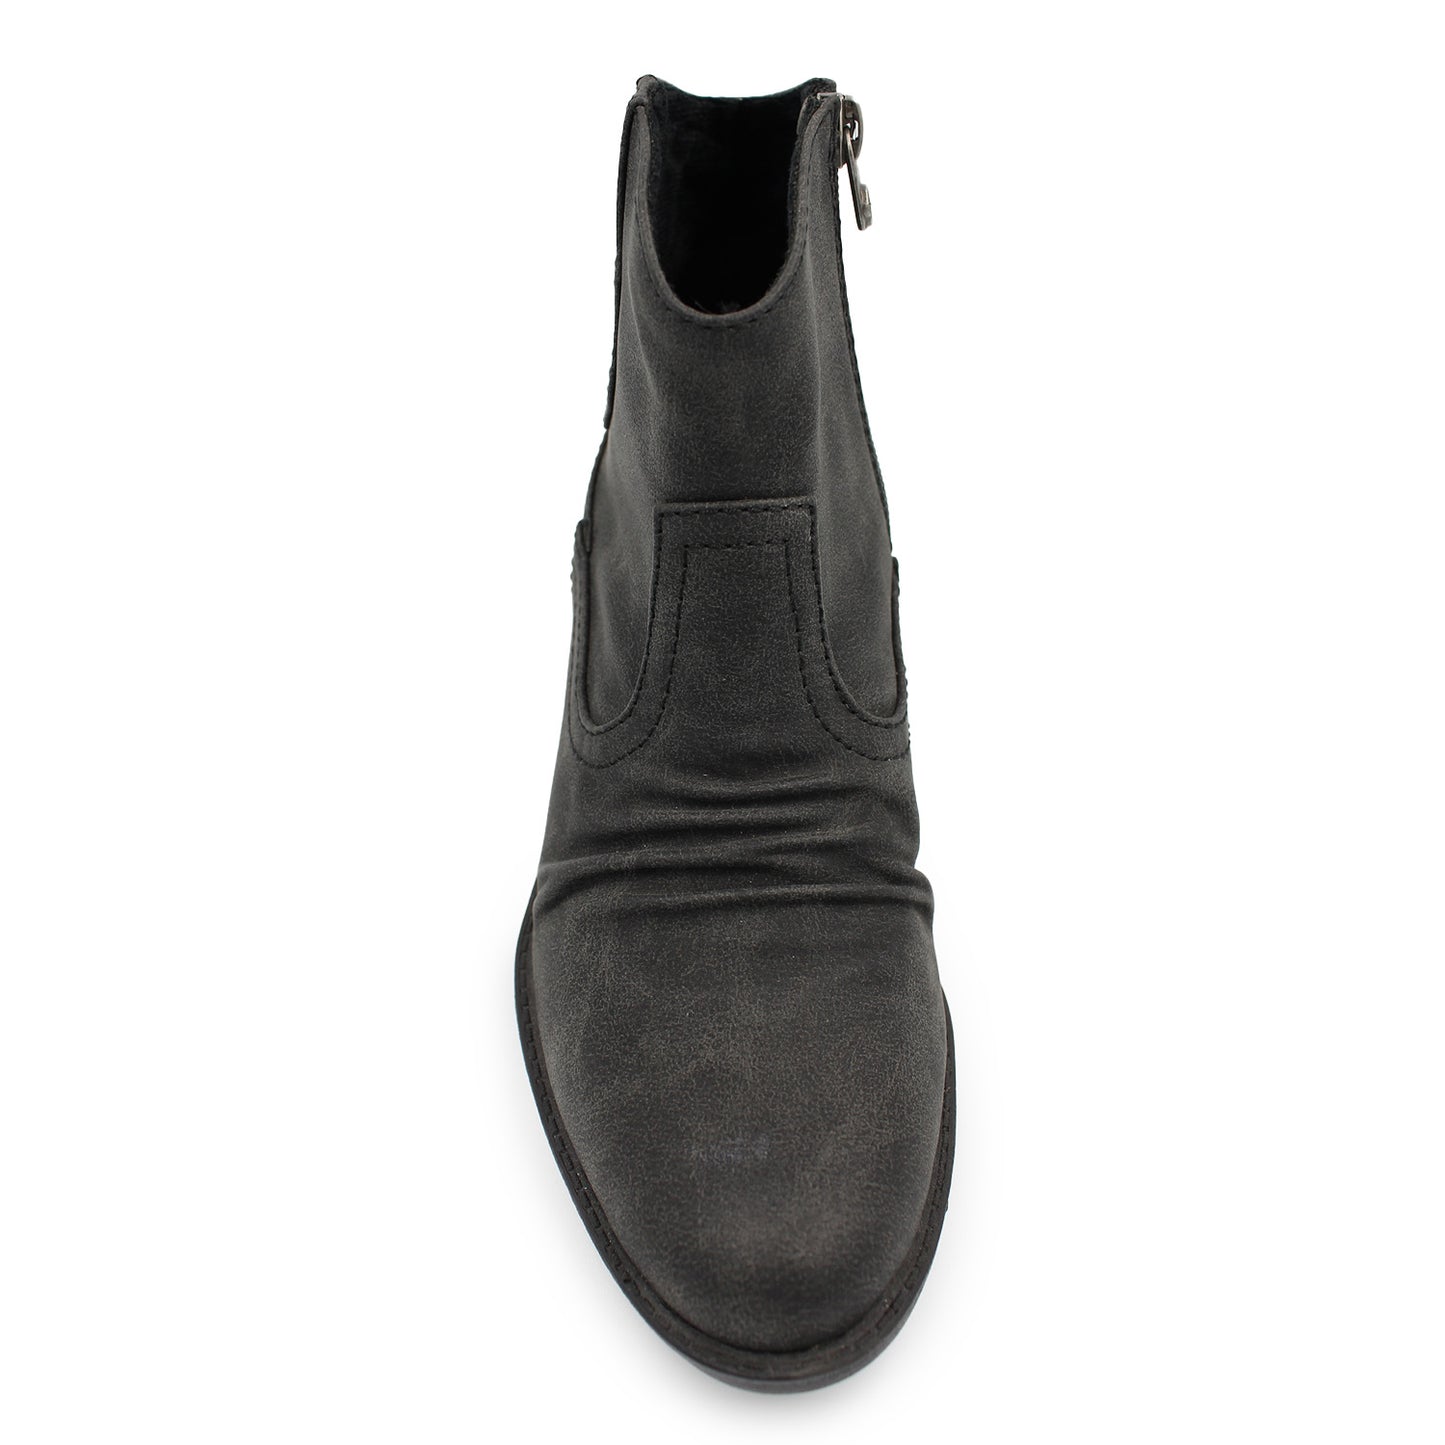 Lane Western Boots - Black